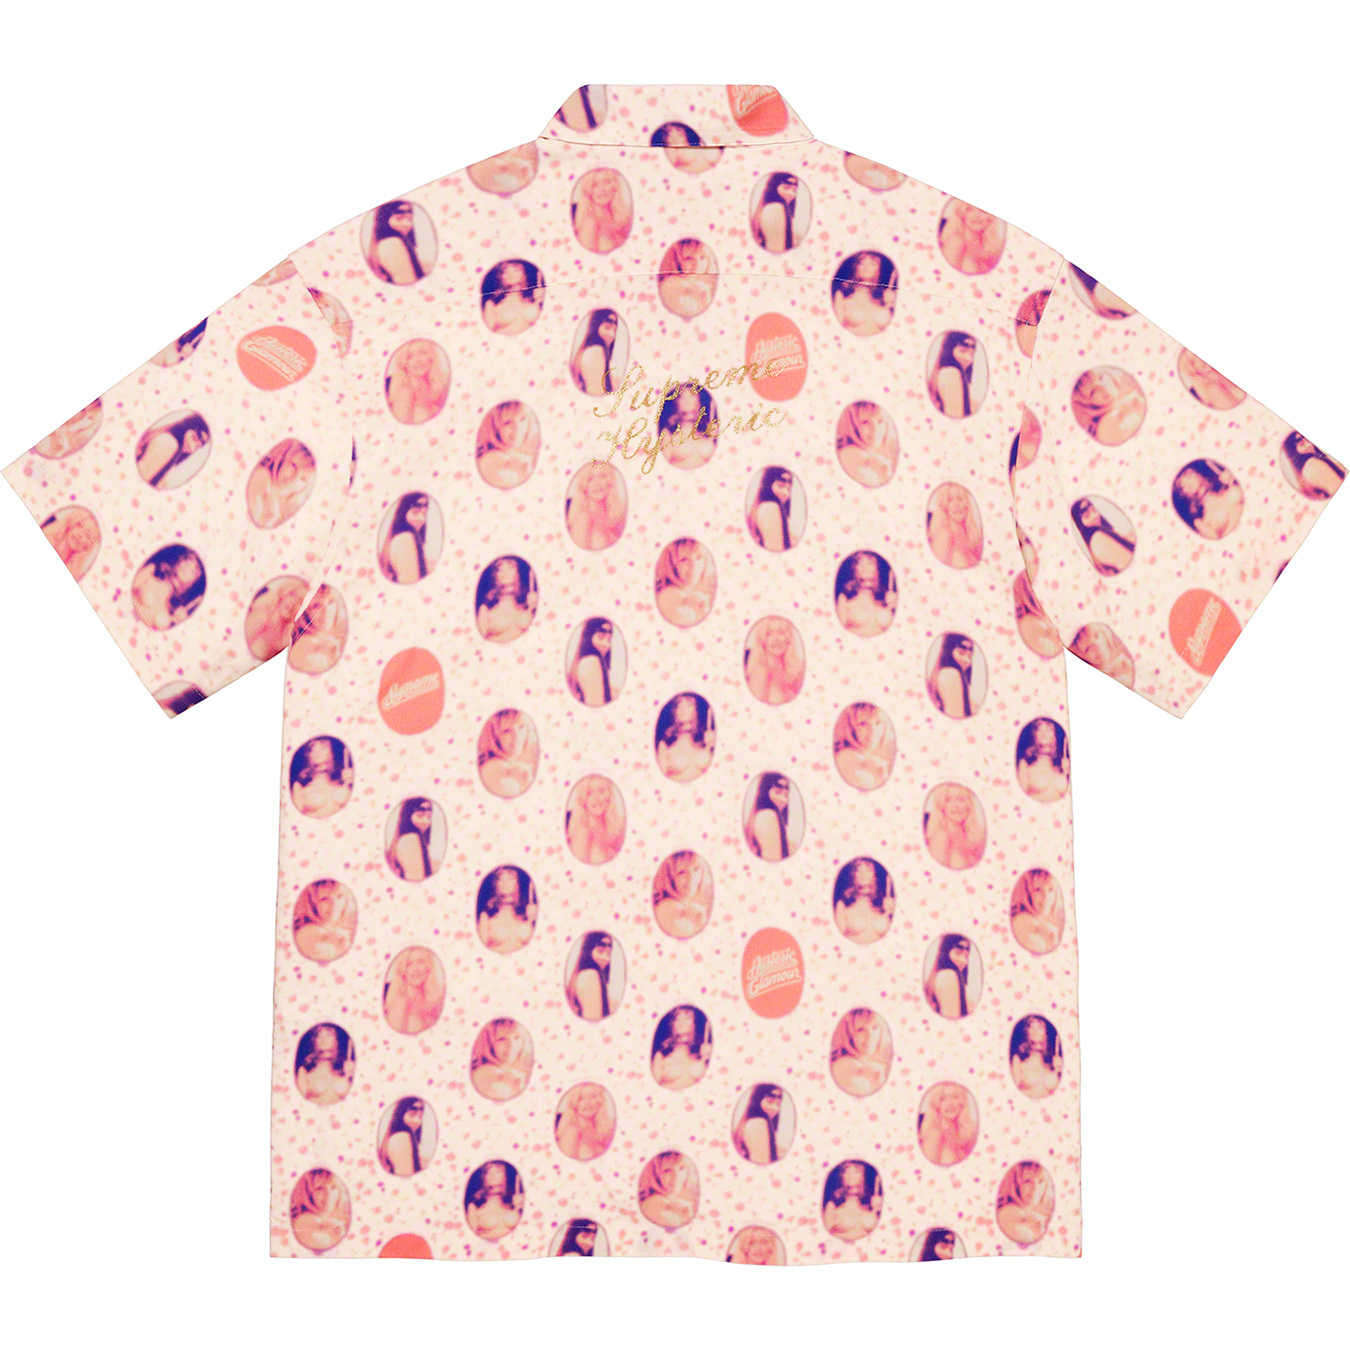 Supreme®/HYSTERIC GLAMOUR Blurred Girls Rayon S/S Shirt - Supreme 